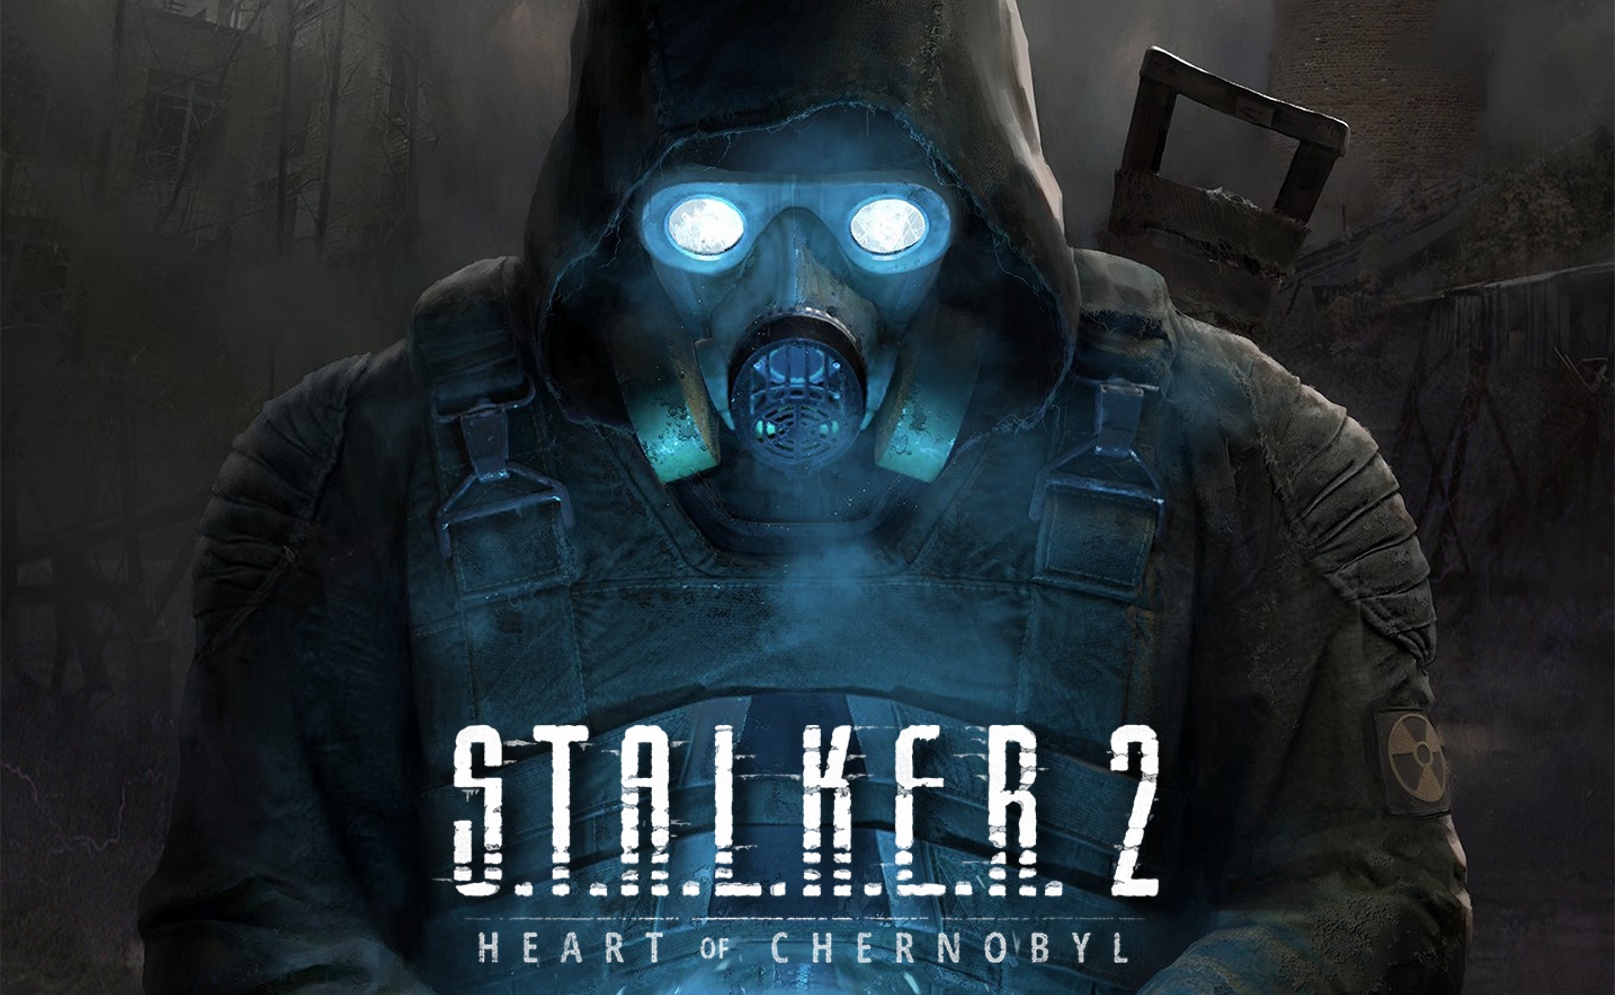 Сталкер 2022 года. S.T.A.L.K.E.R. 2: сердце Чернобыля. Григорович сталкер 2. Stalker 2 Heart of Chernobyl. Новый сталкер s.t.a.l.k.e.r 2.